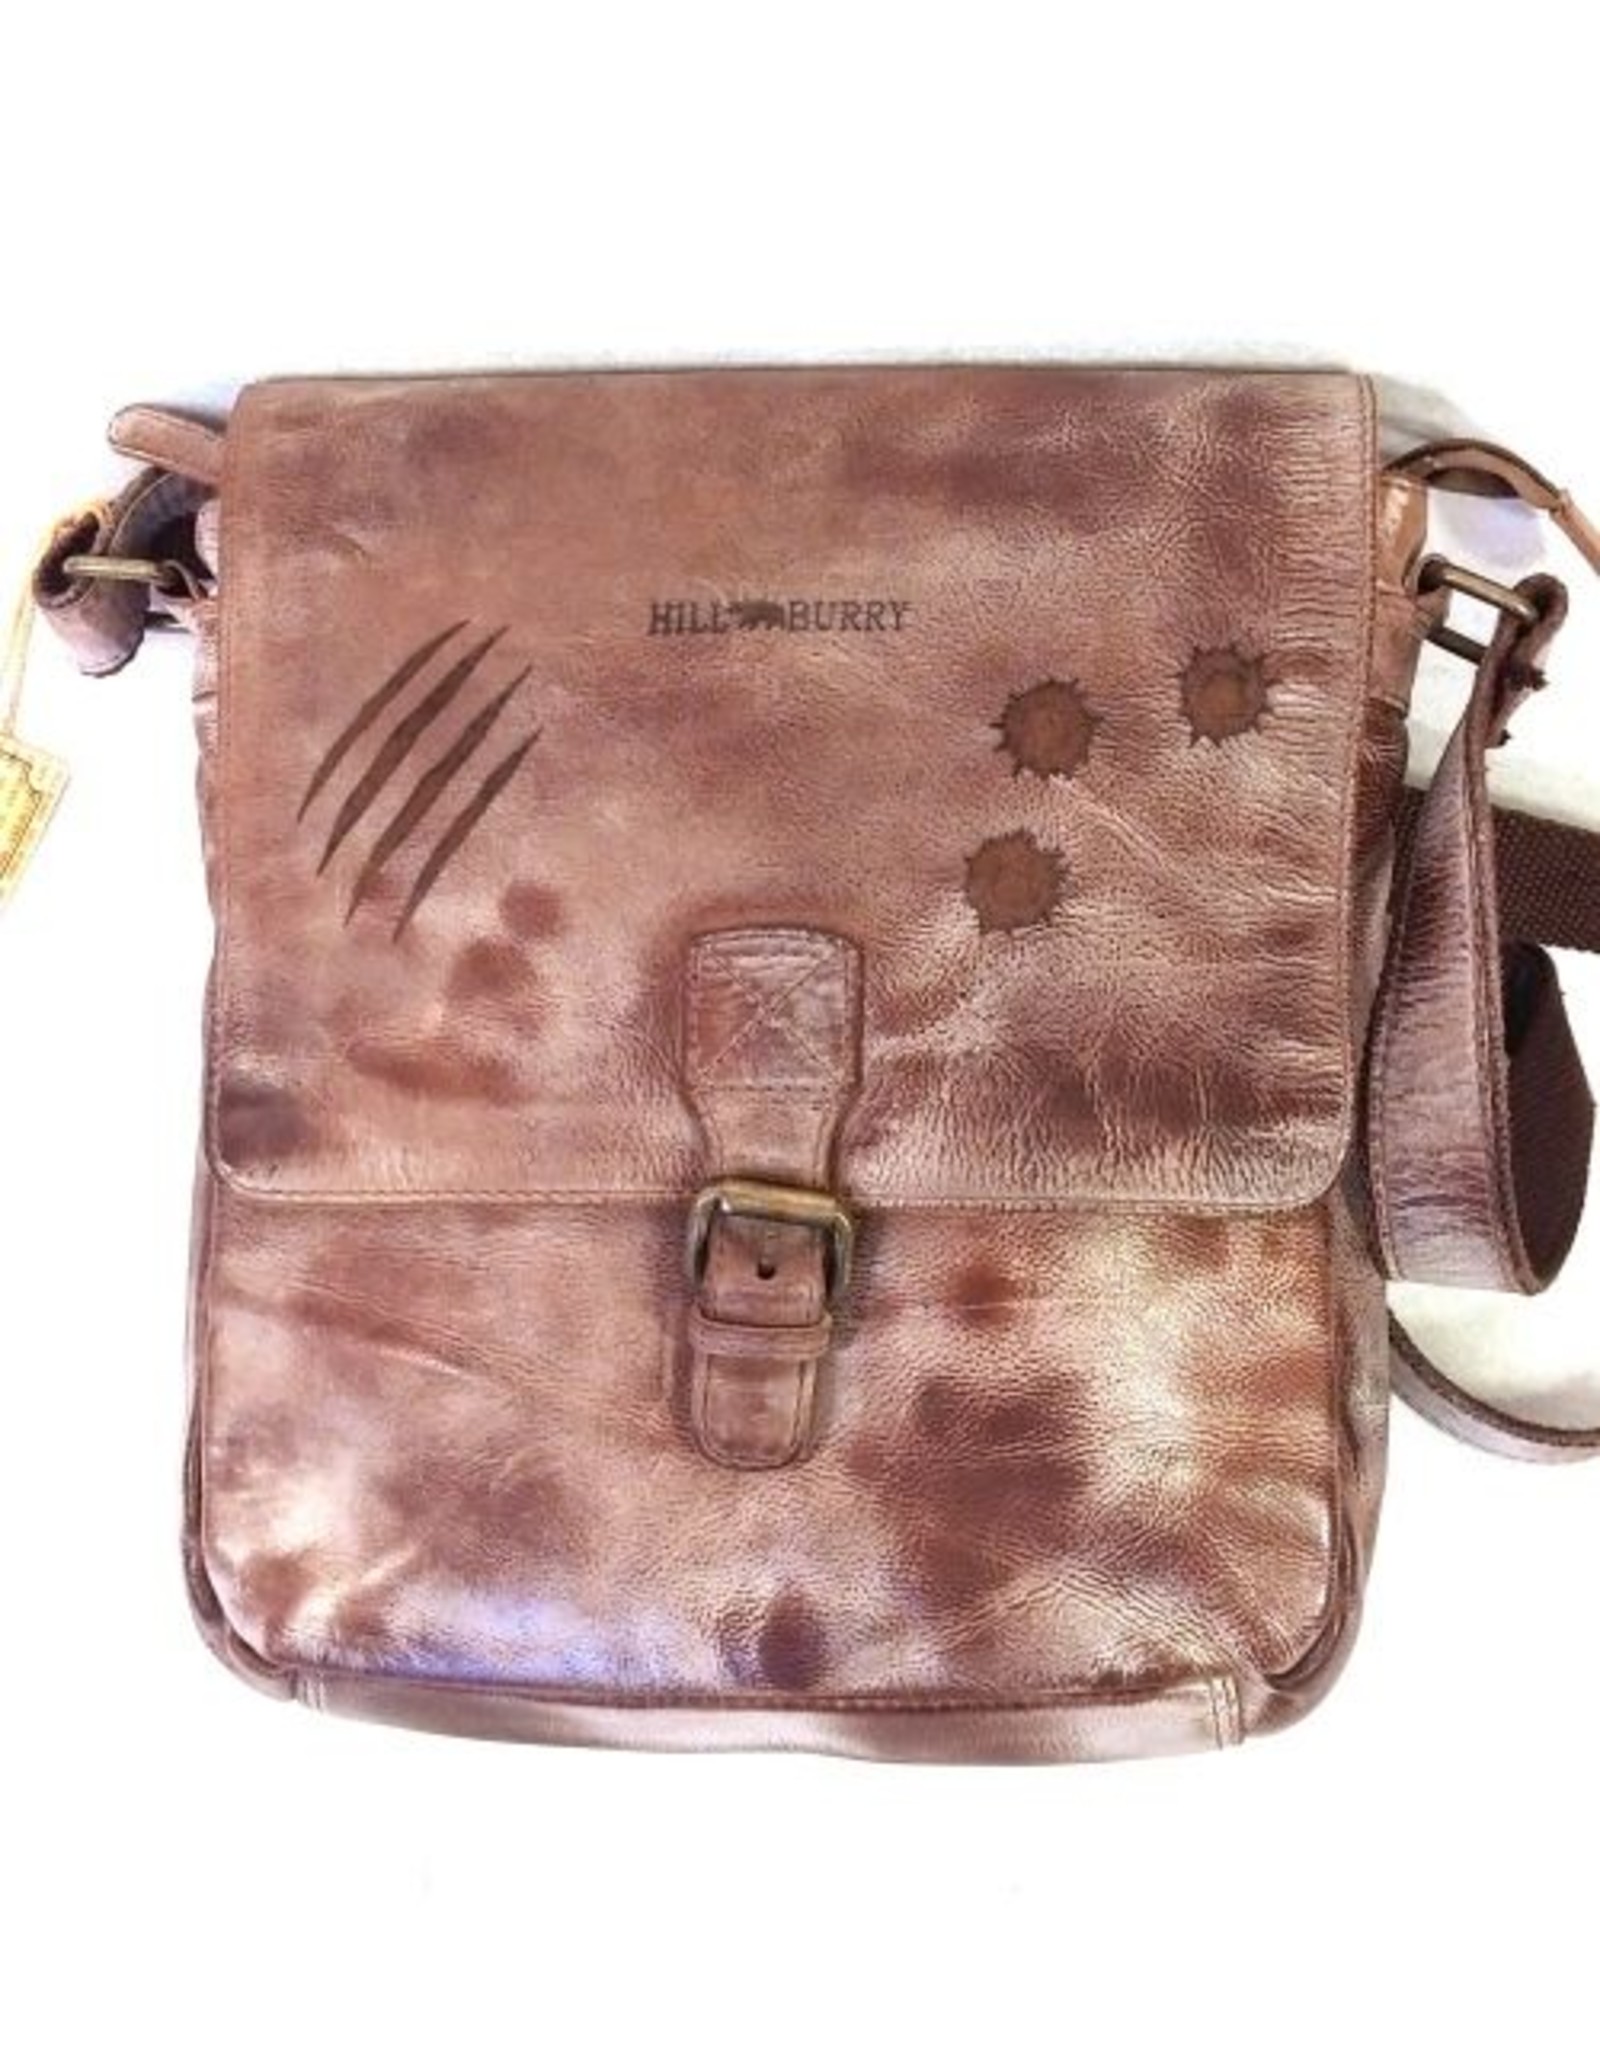 HillBurry Leather bags - HillBurry leather shoulder bag 2309